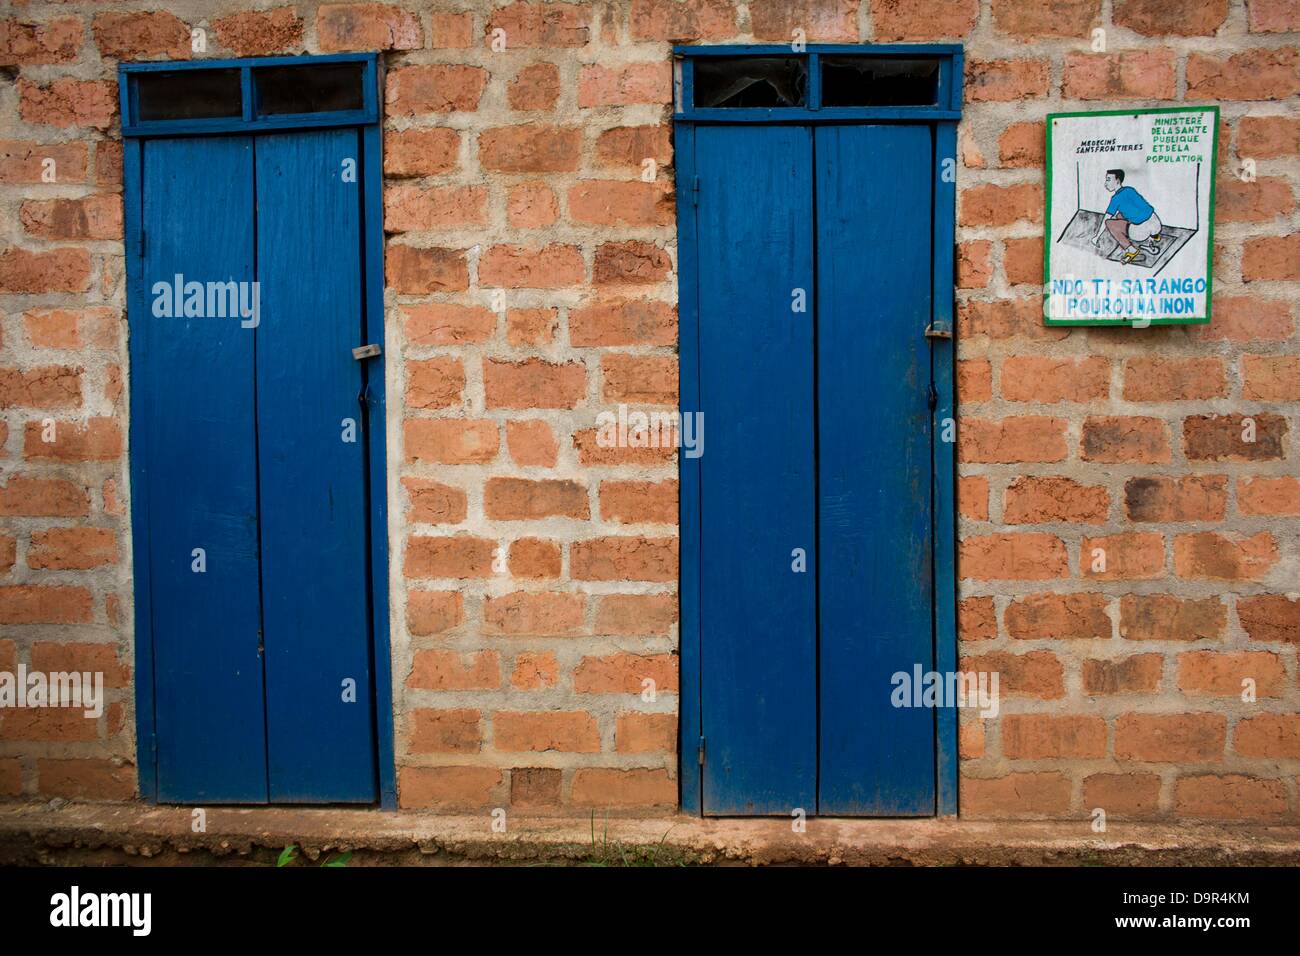 health education at the latrine in batangafo hopsital, CAR Stock Photo